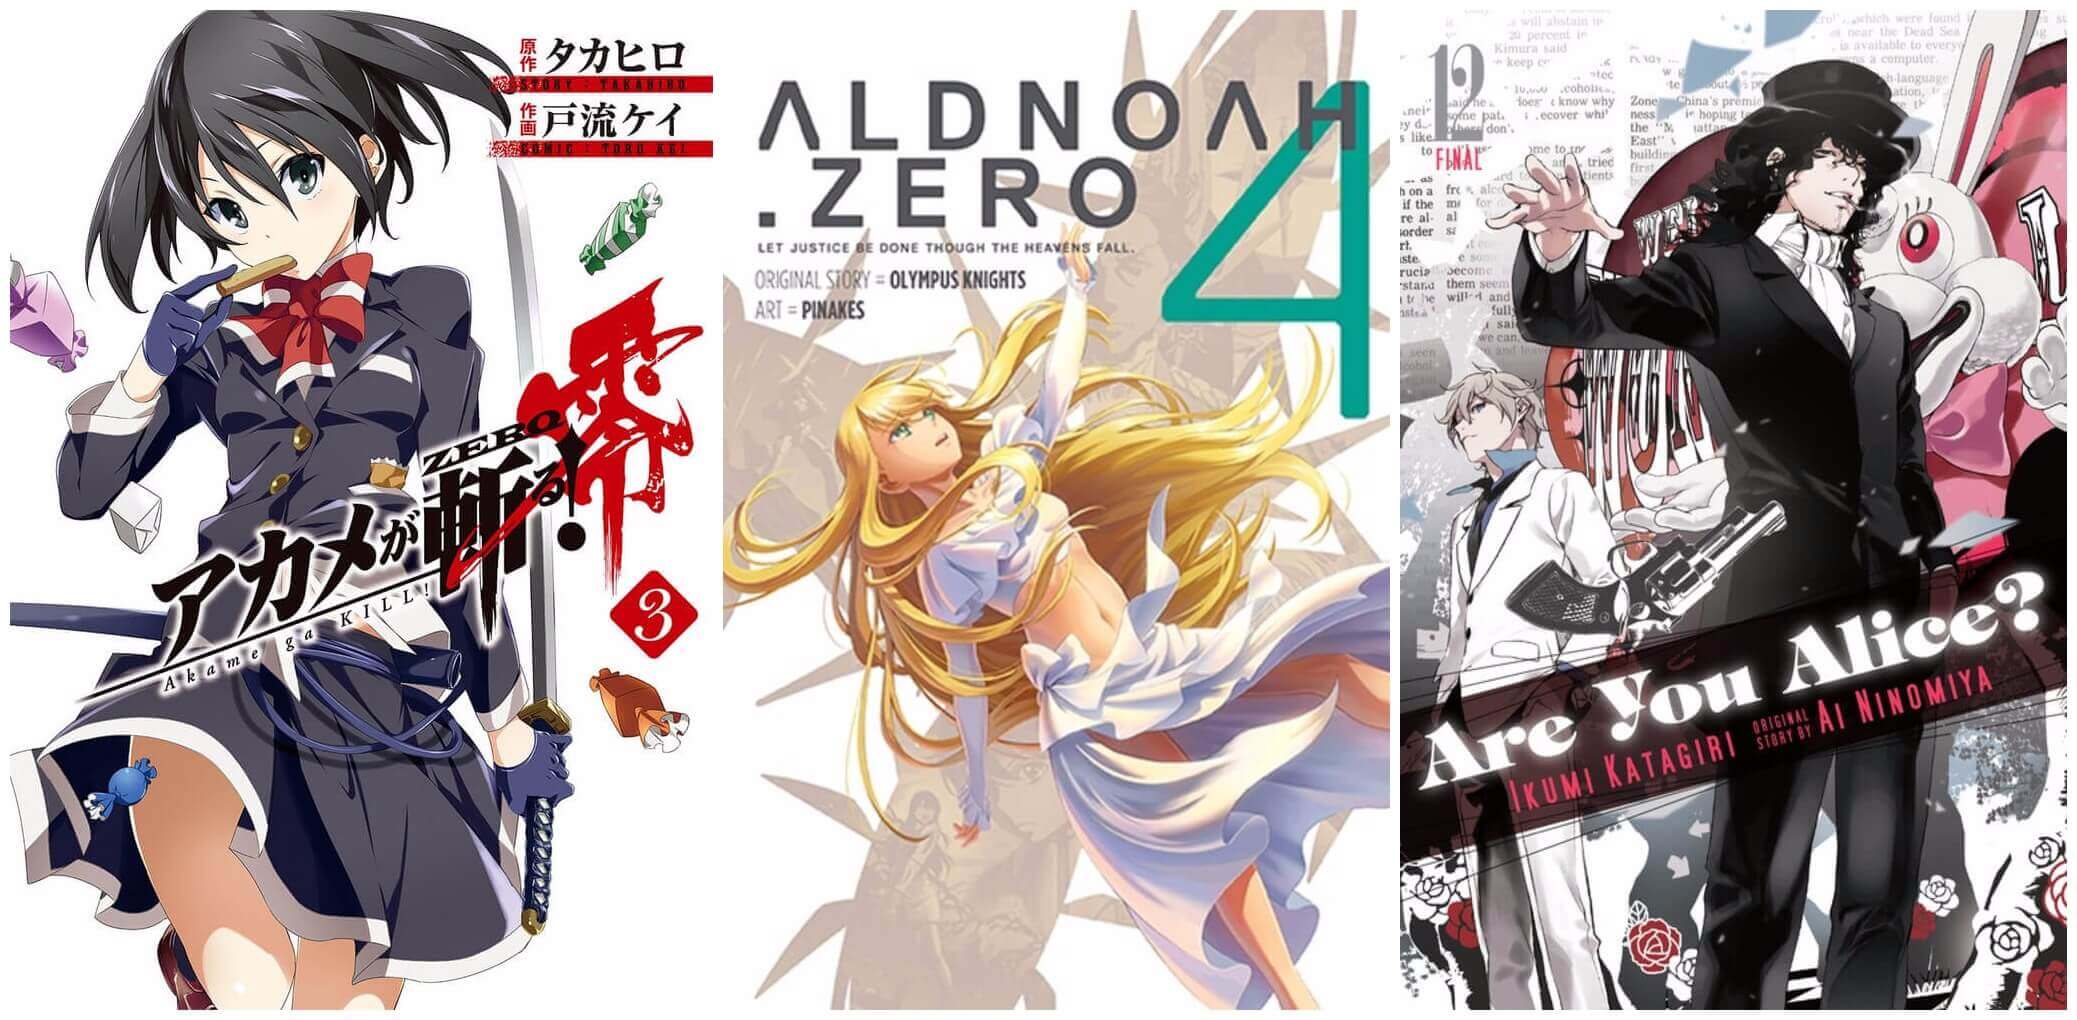 September 2016 Manga Releases Covers for Akame ga Kill Zero, Aldnoah.Zero, and Are You Alice?